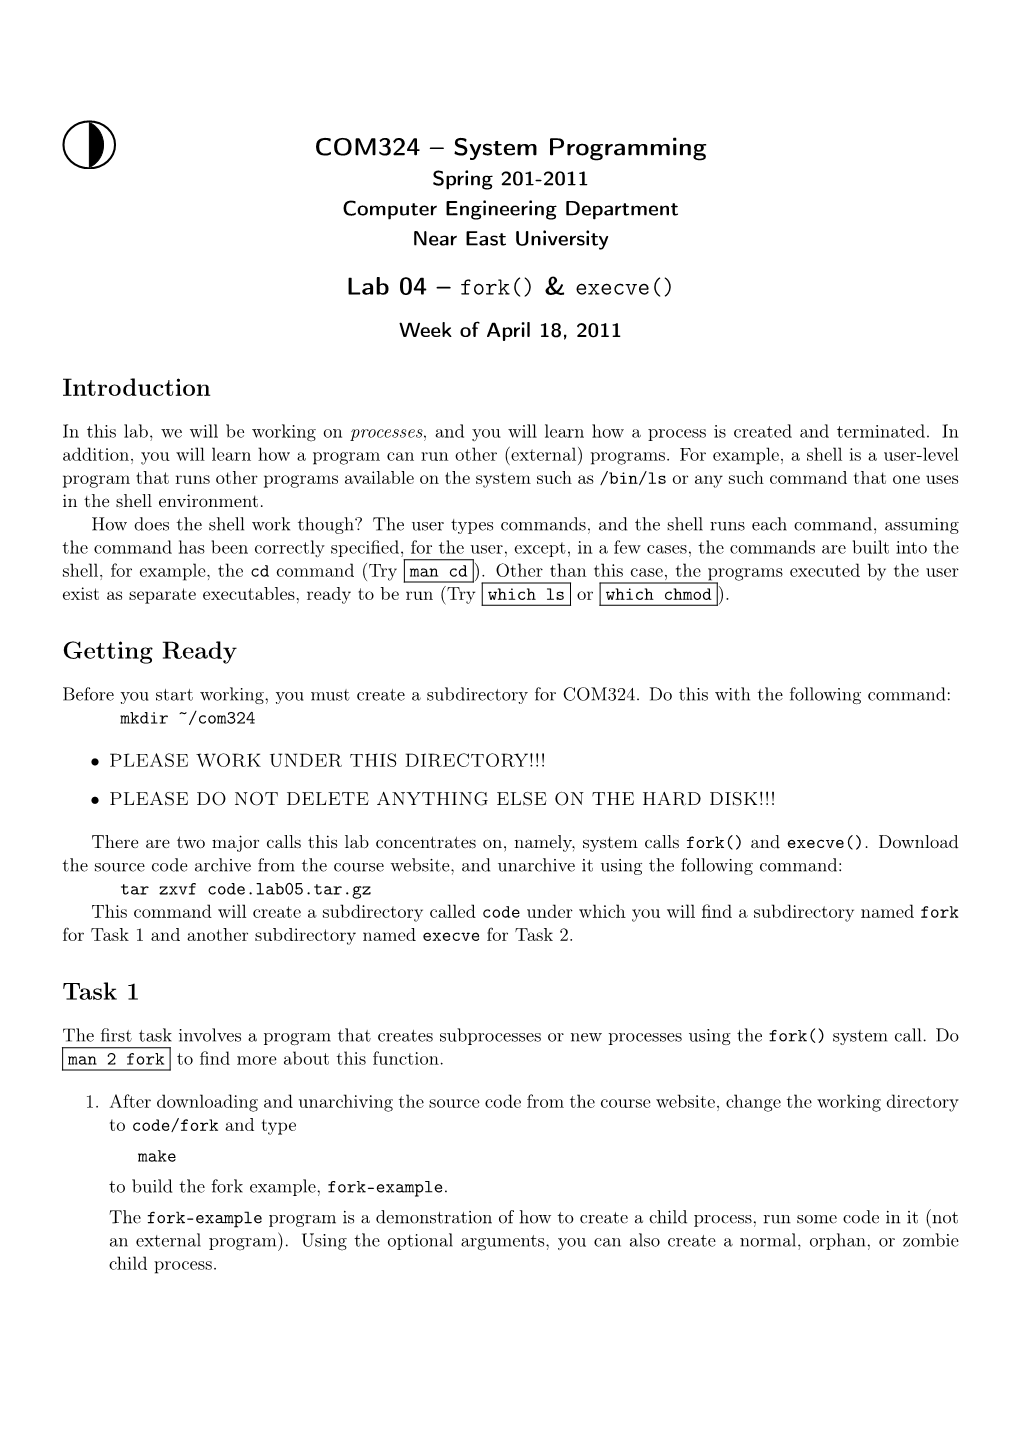 COM324 – System Programming Lab 04 – Fork() & Execve() Introduction